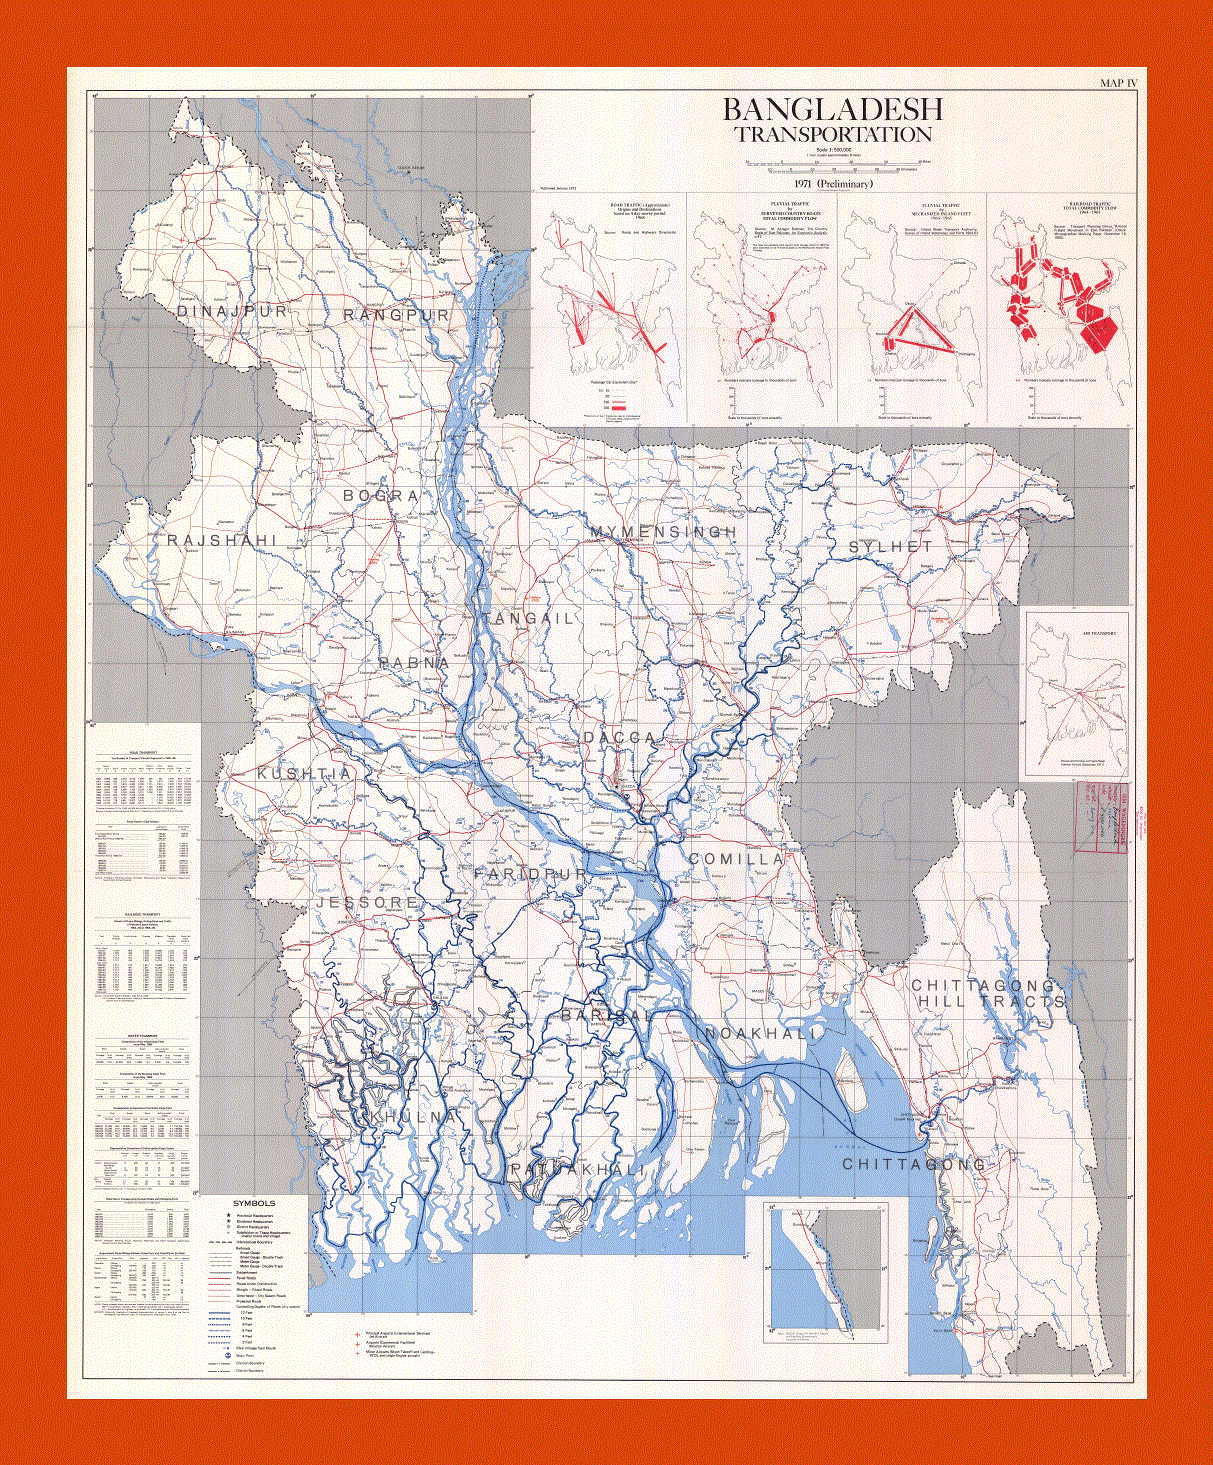 Transportation map of Bangladesh